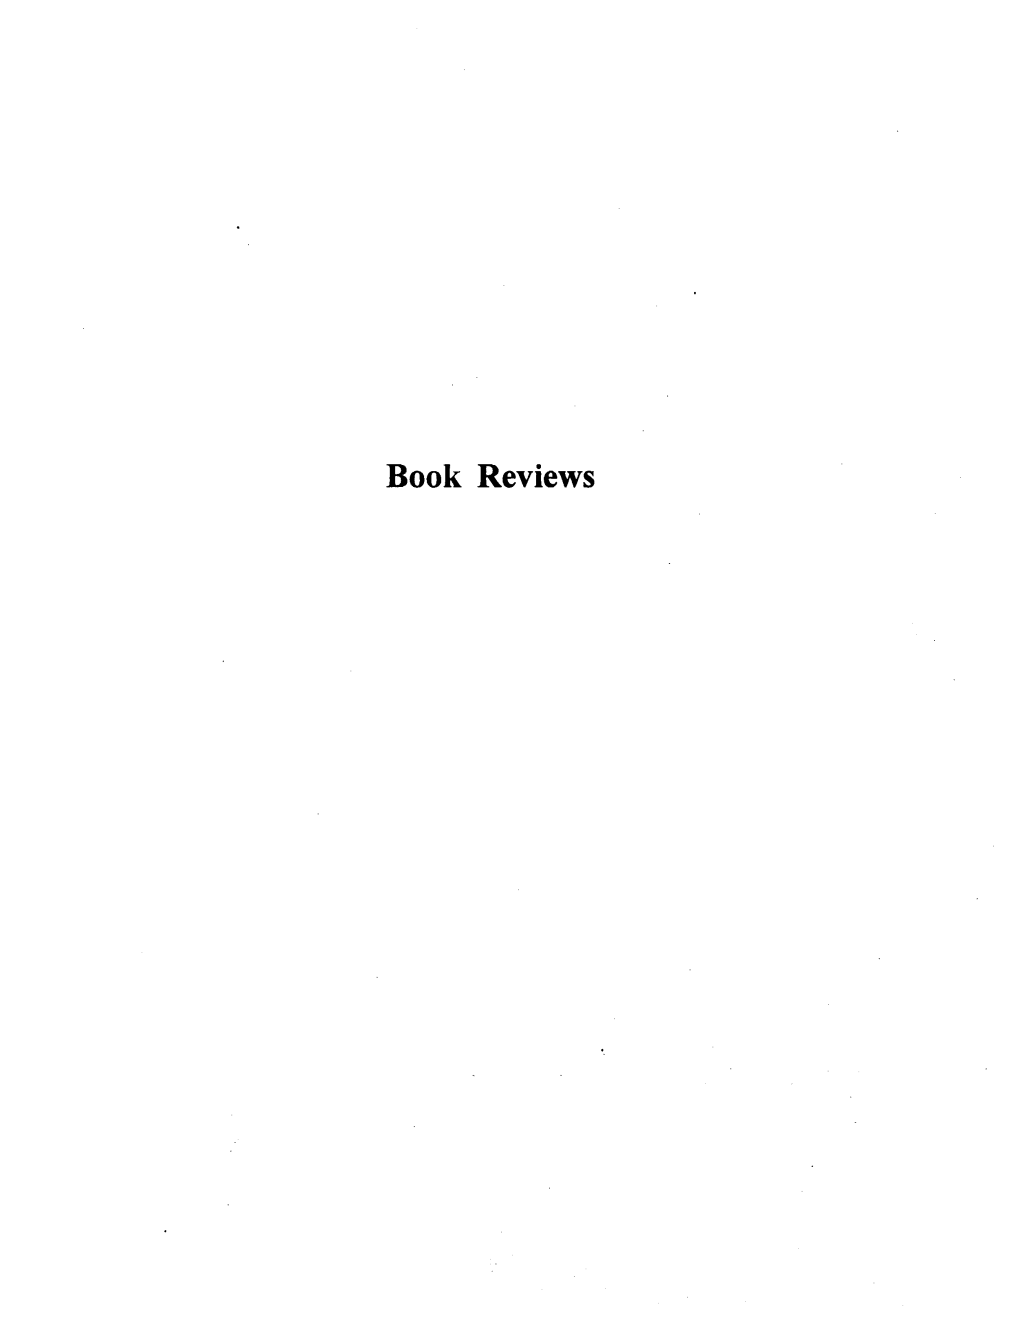 Book Reviews 267